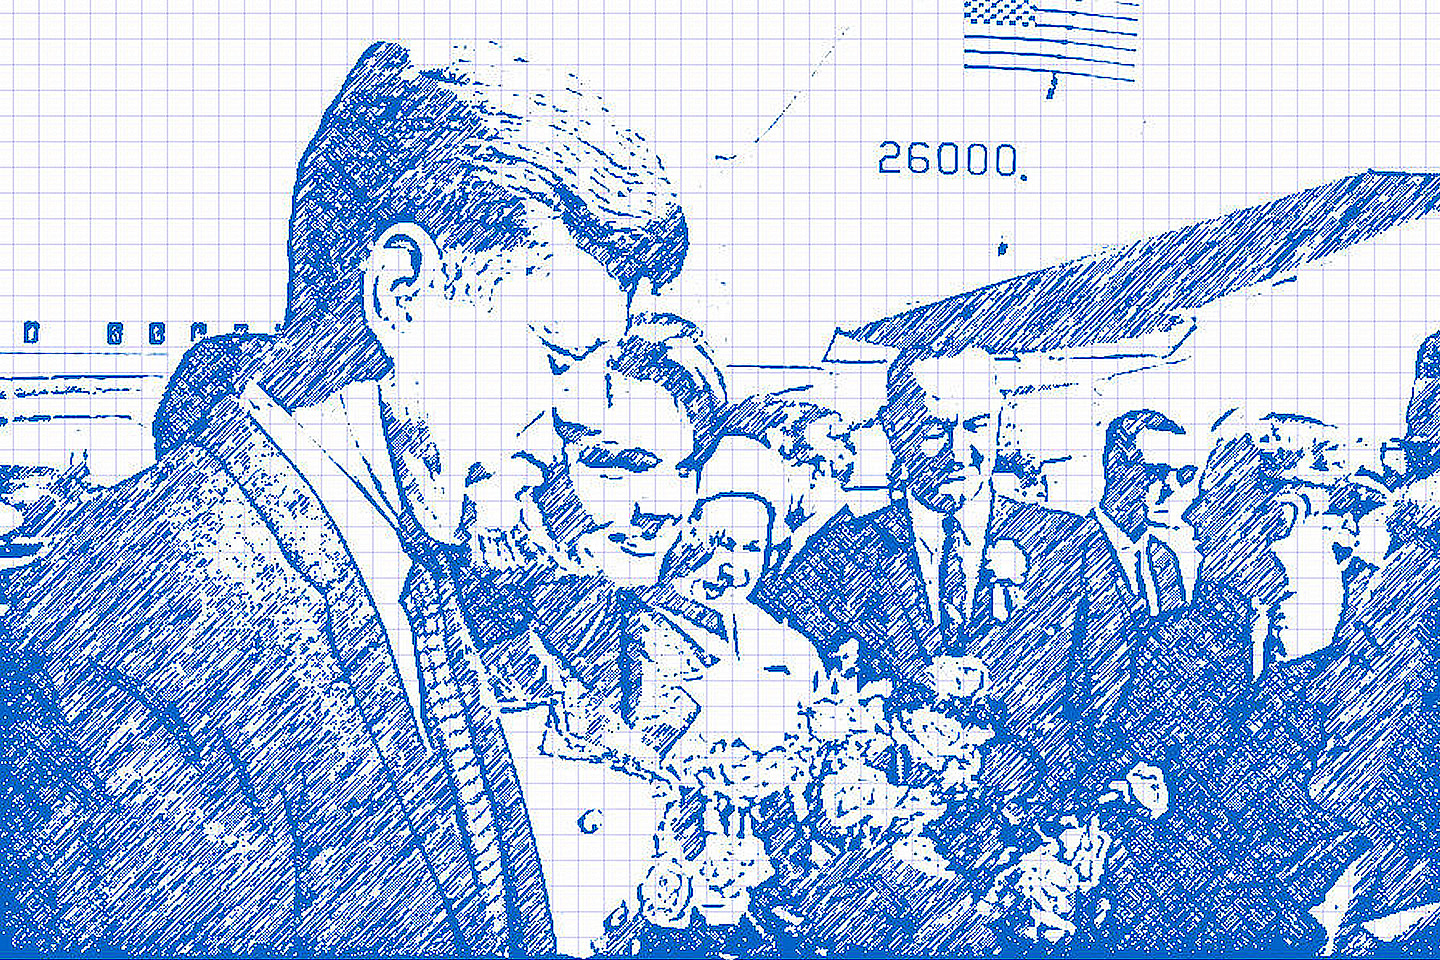 President Kennedy arrives Dallas Love Field November 22, 1963